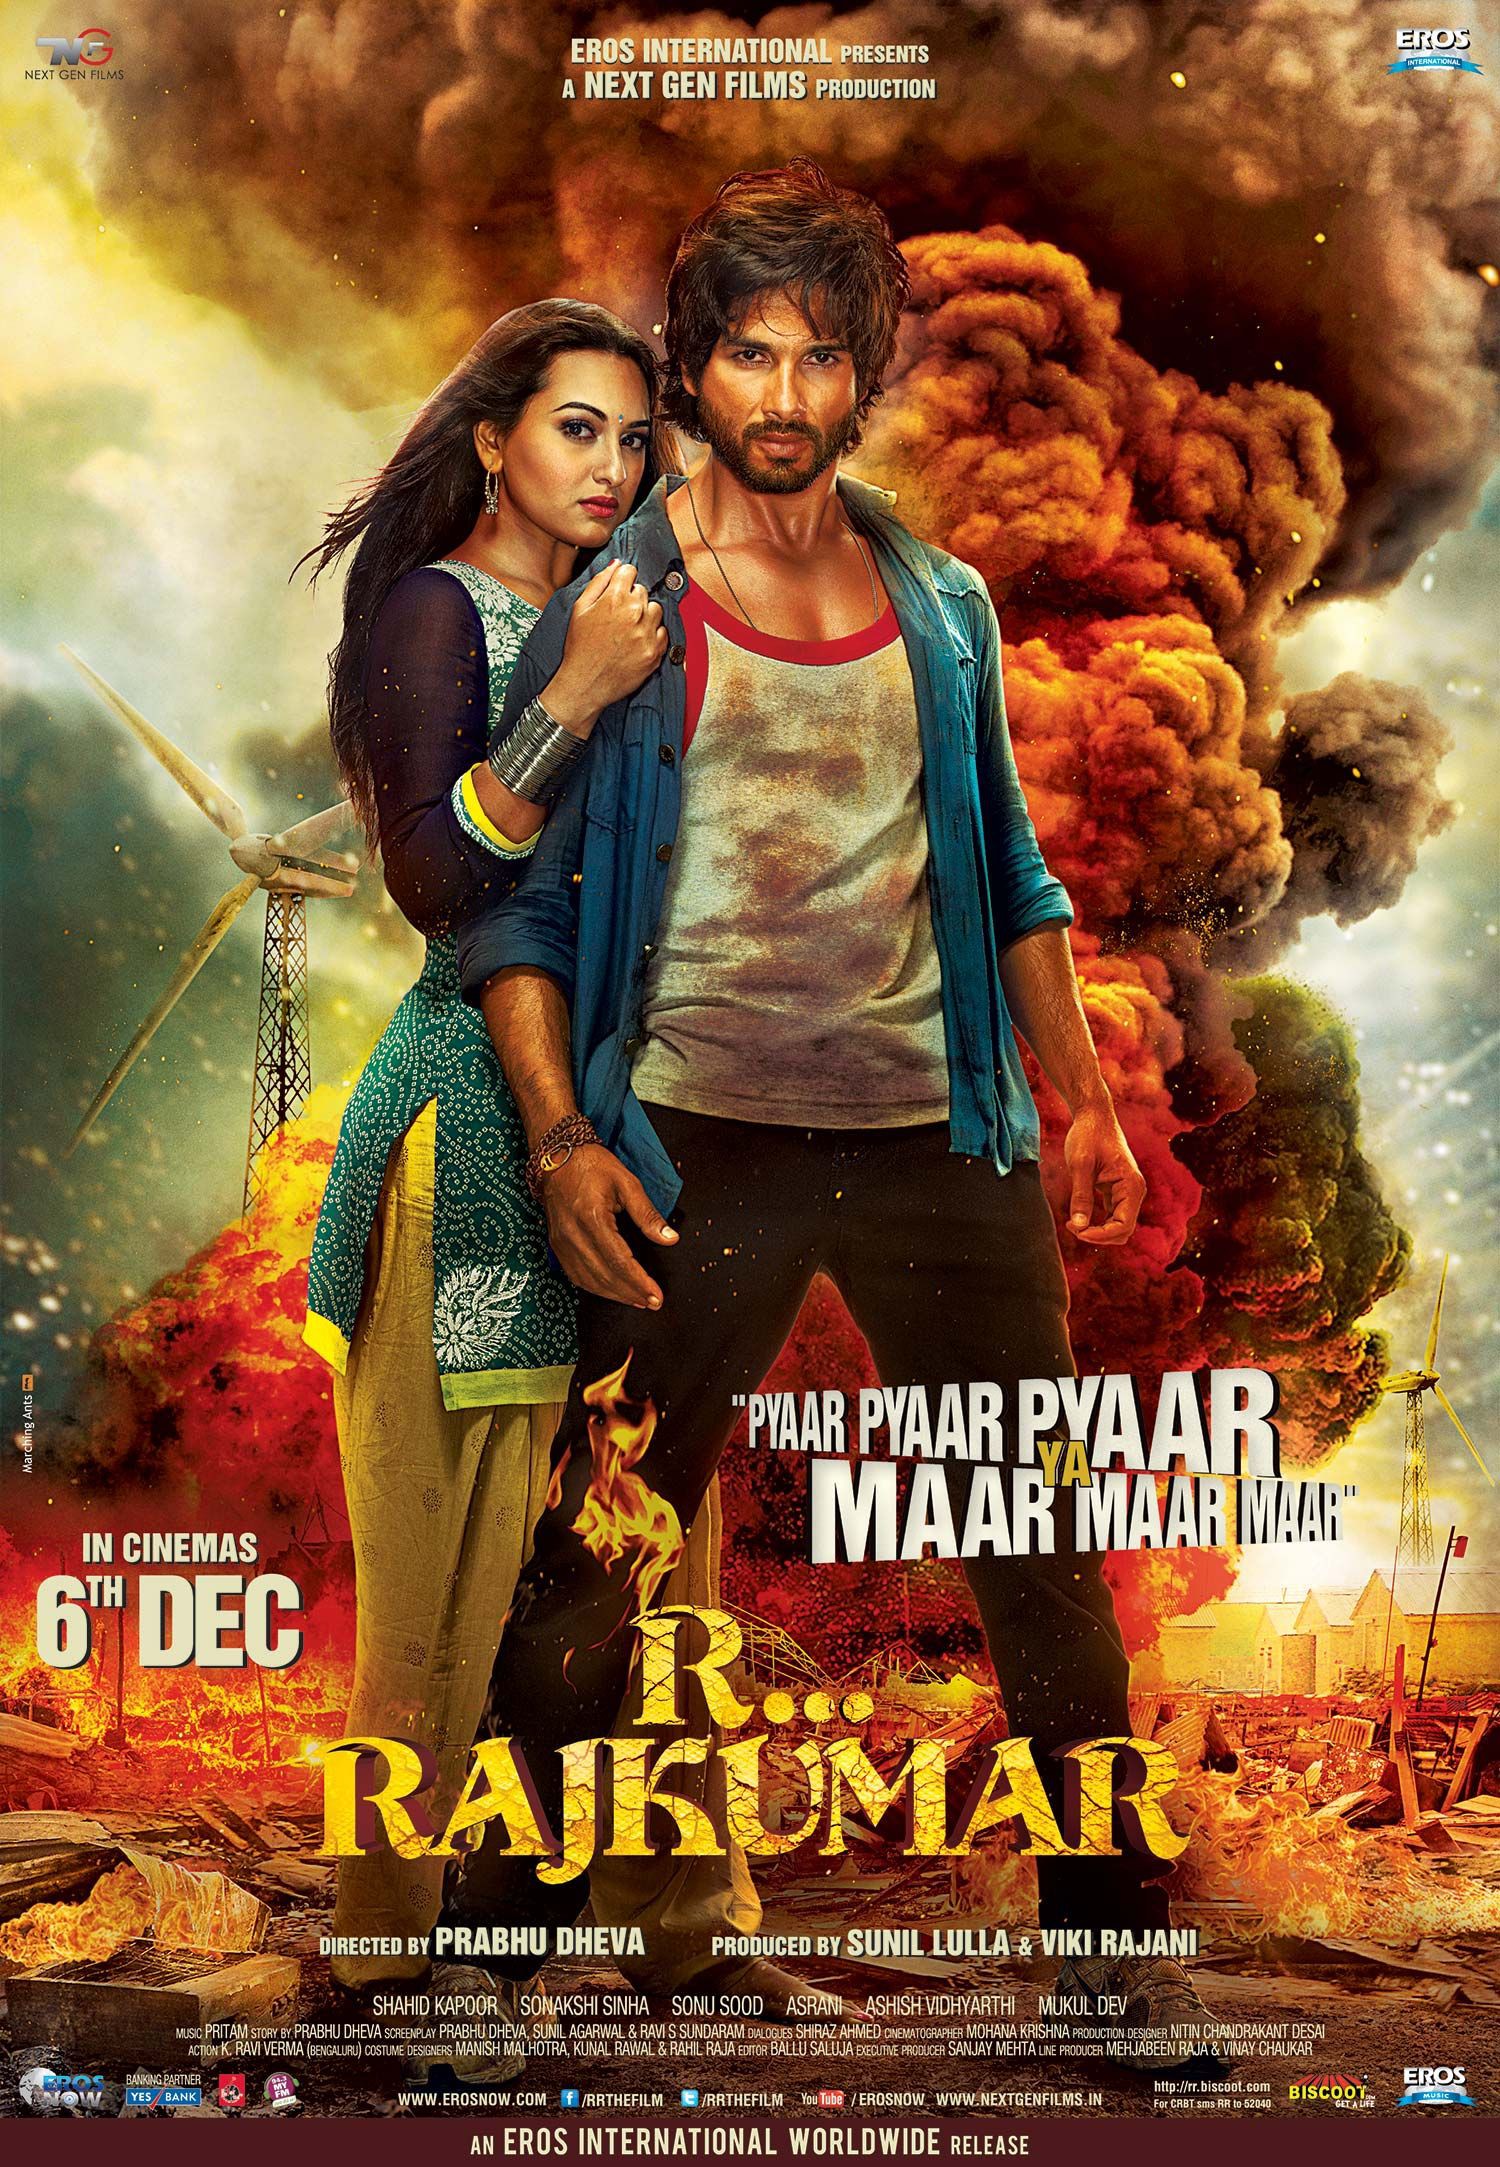 Mega Sized Movie Poster Image for R... Rajkumar (#1 of 5)